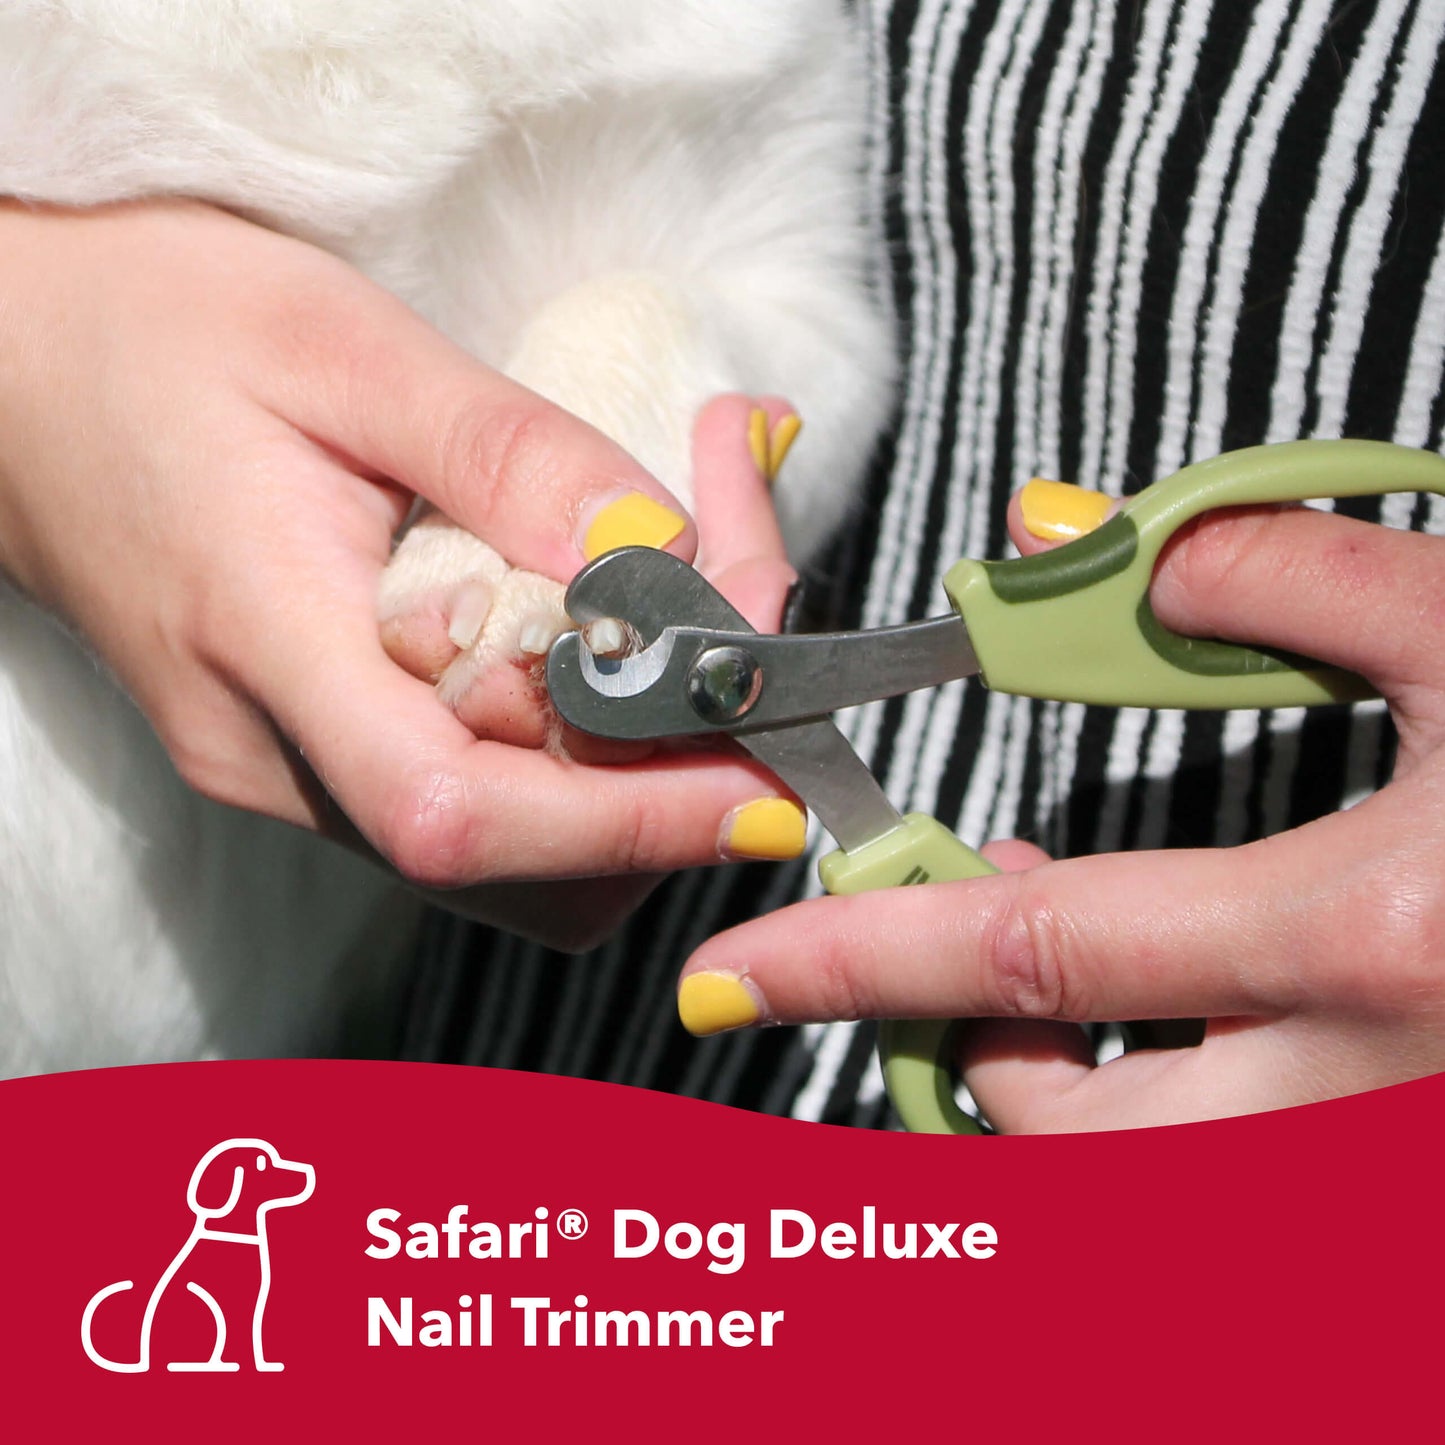 Safari Dog Deluxe Nail Trimmer